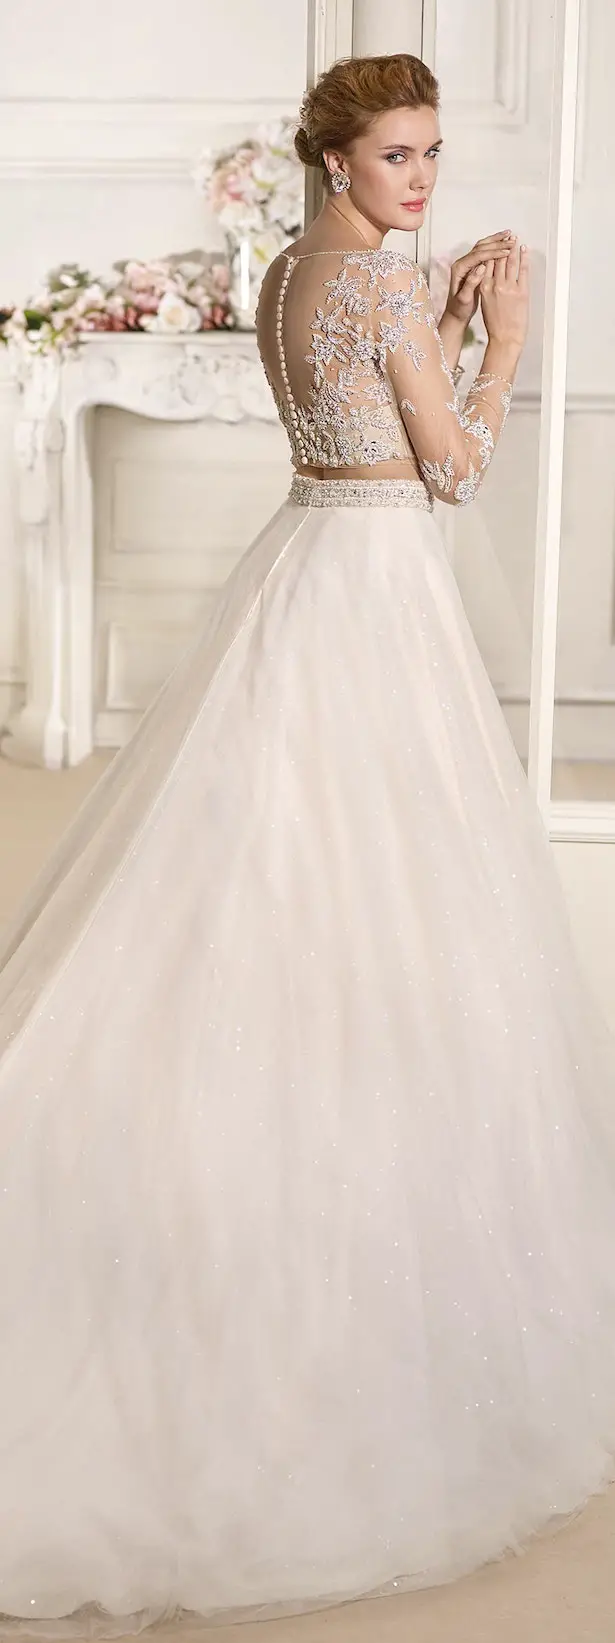 Long sleeves crop top Wedding Dress by Fara Sposa 2017 Bridal Collection